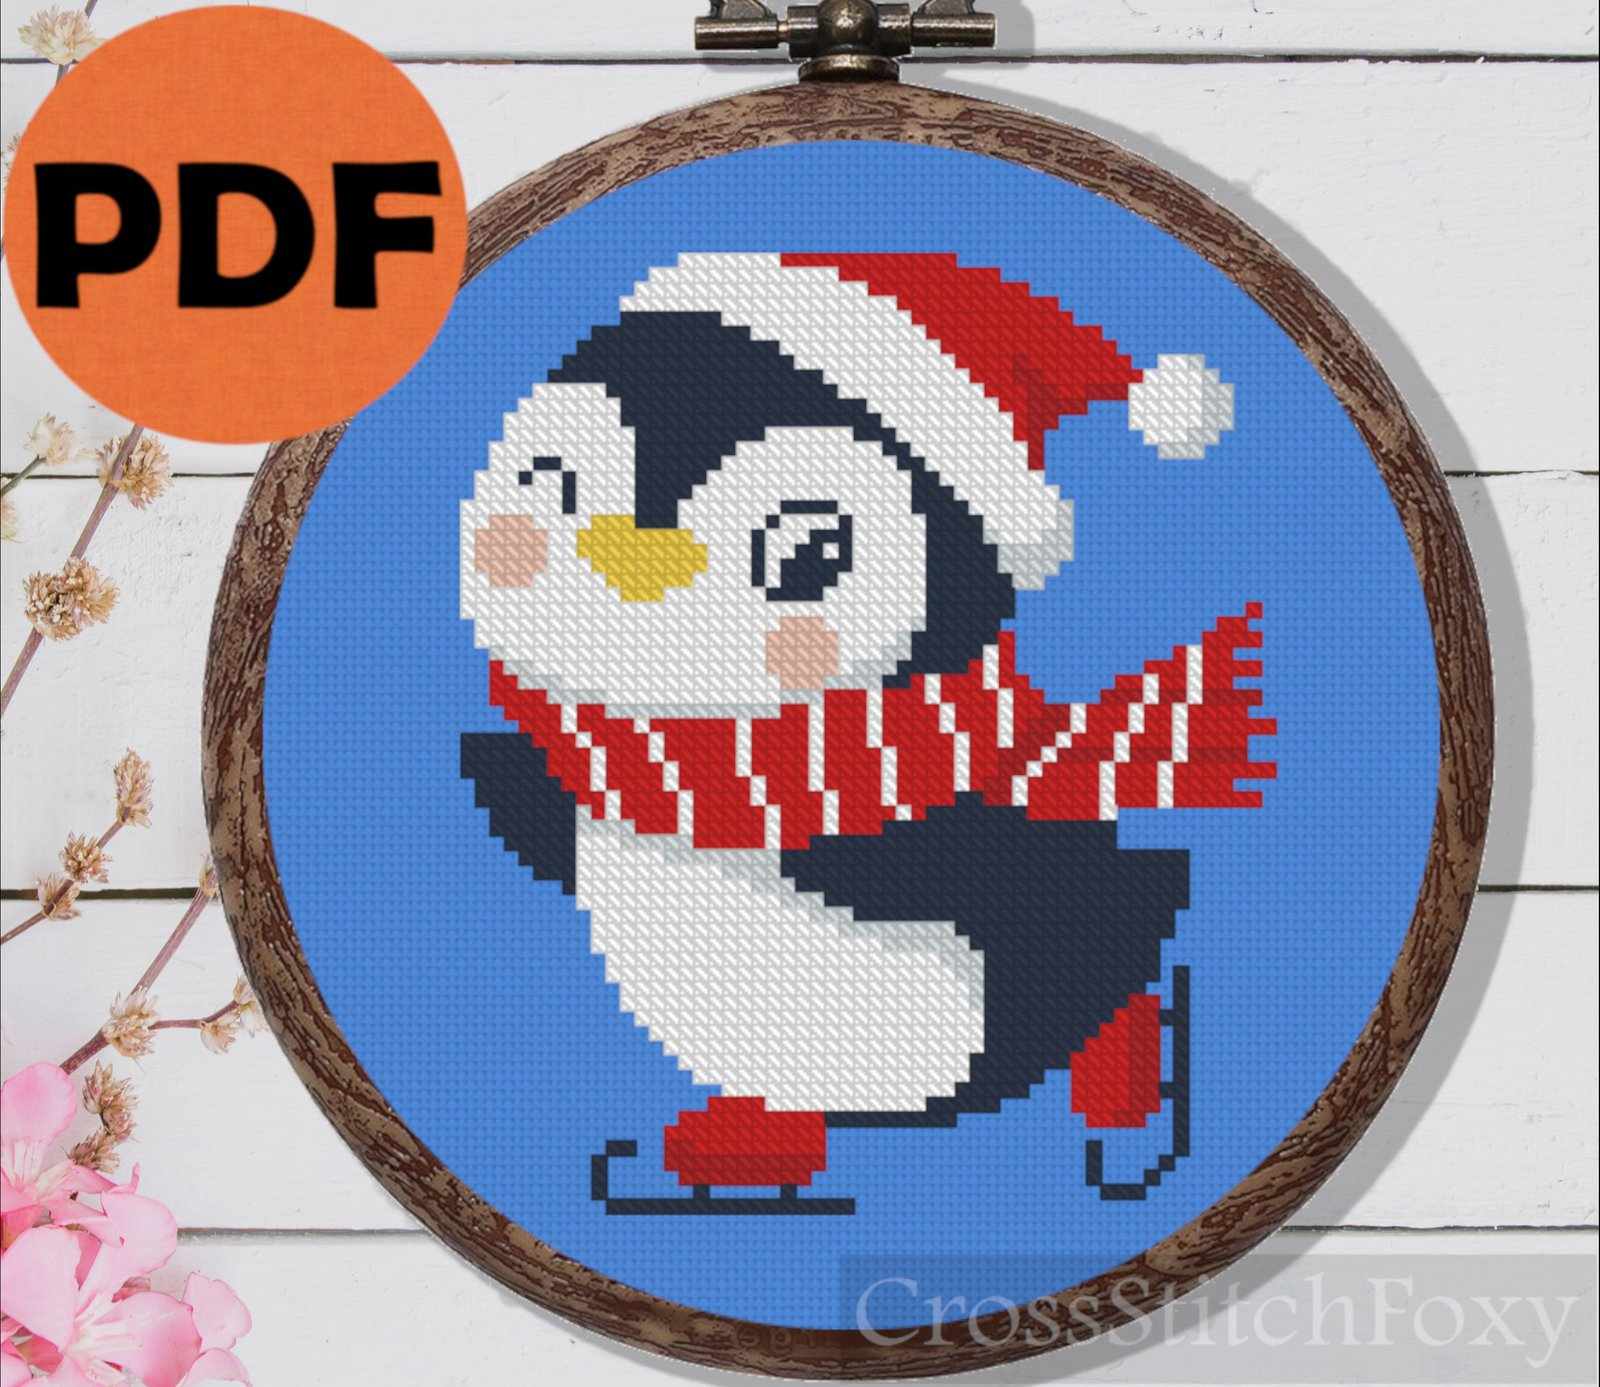 Penguin Cross-Stitch Pattern